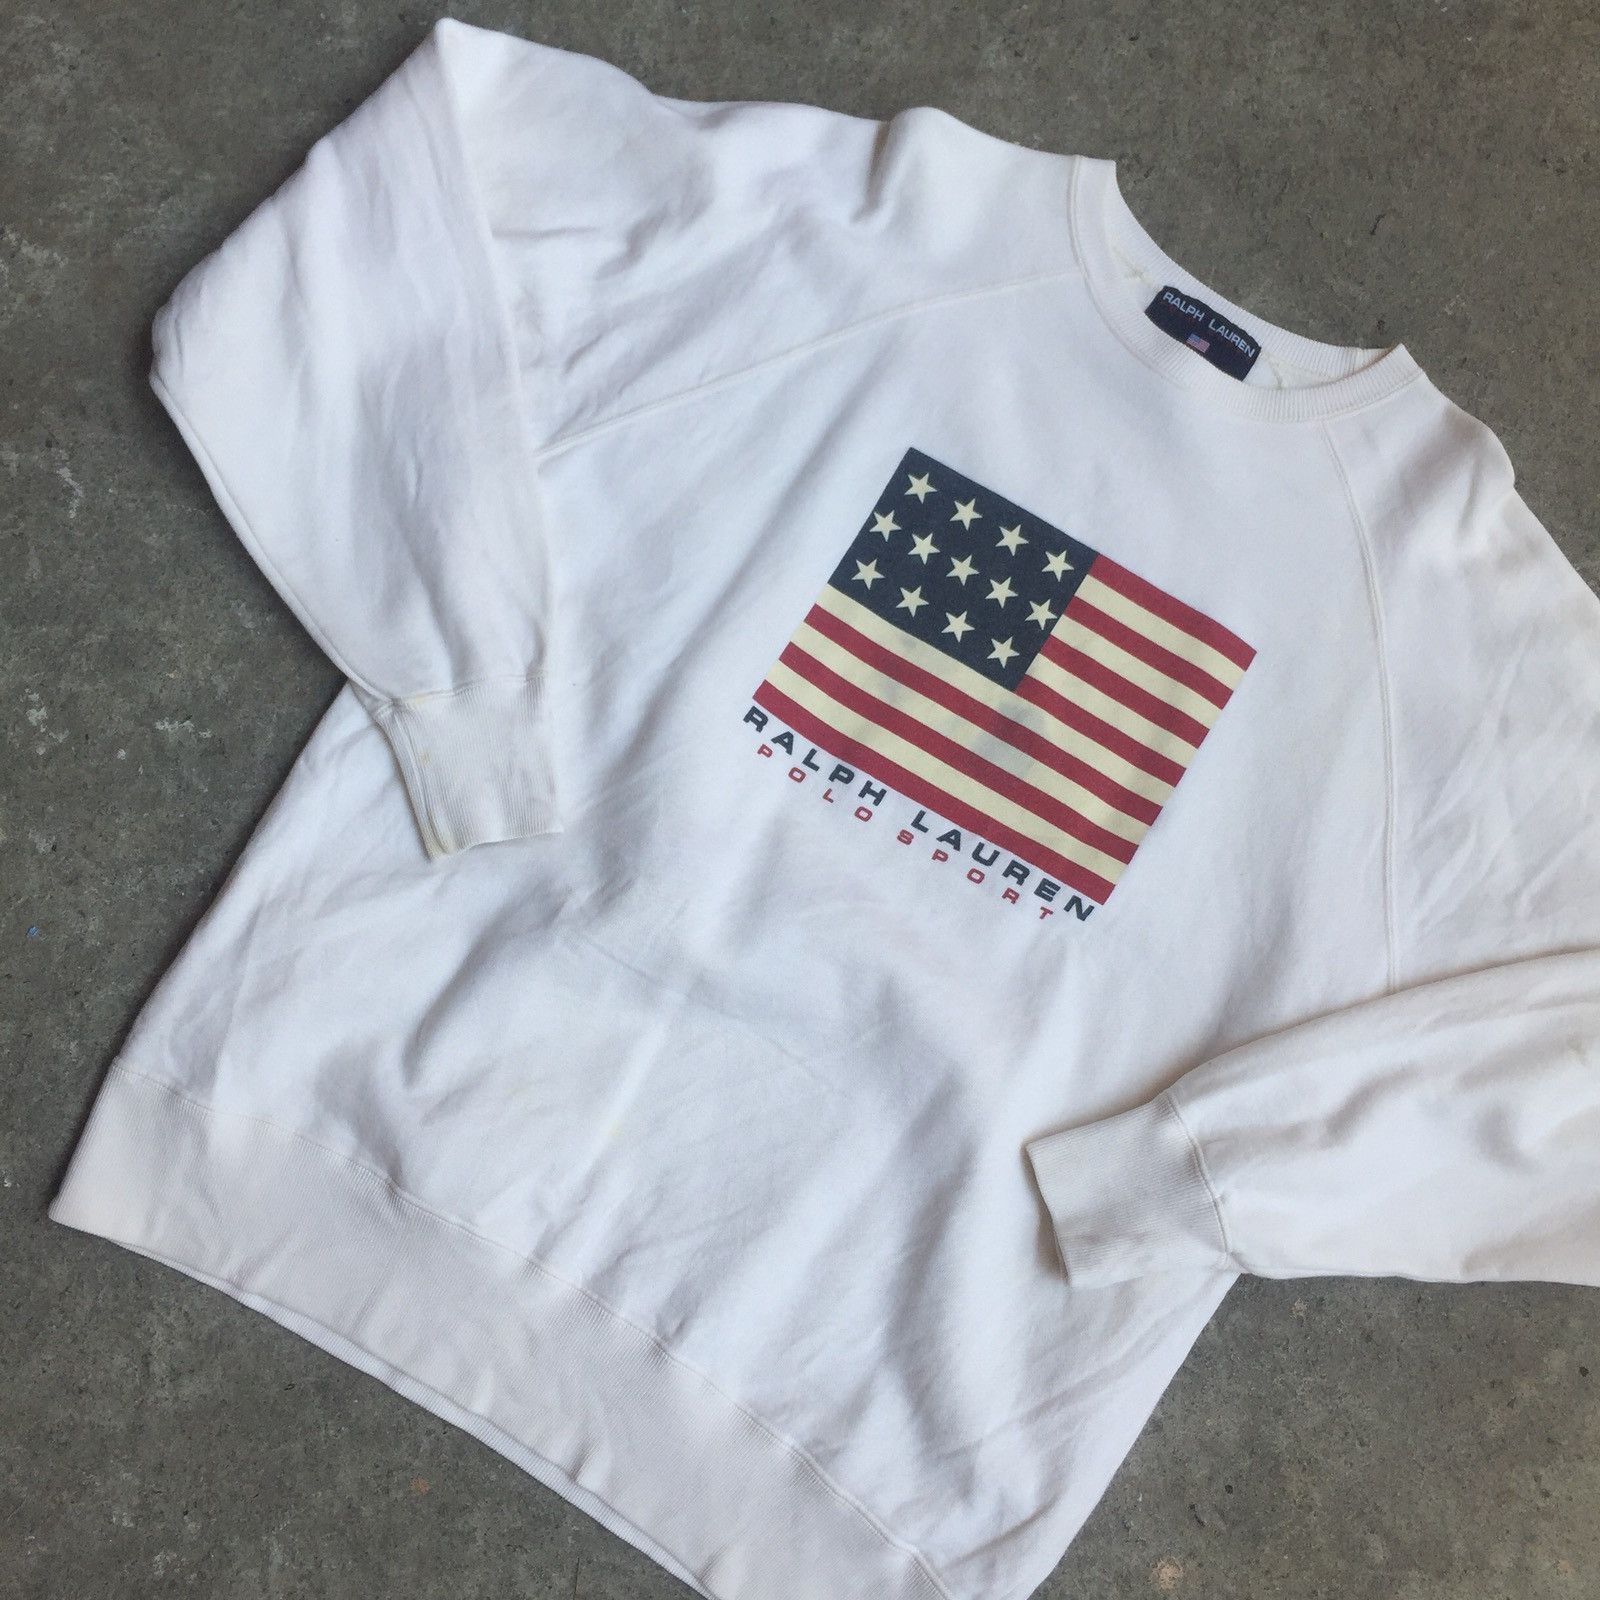 Polo Ralph Lauren - Vintage Polo sport ralph lauren USA flag logo sweater - 1